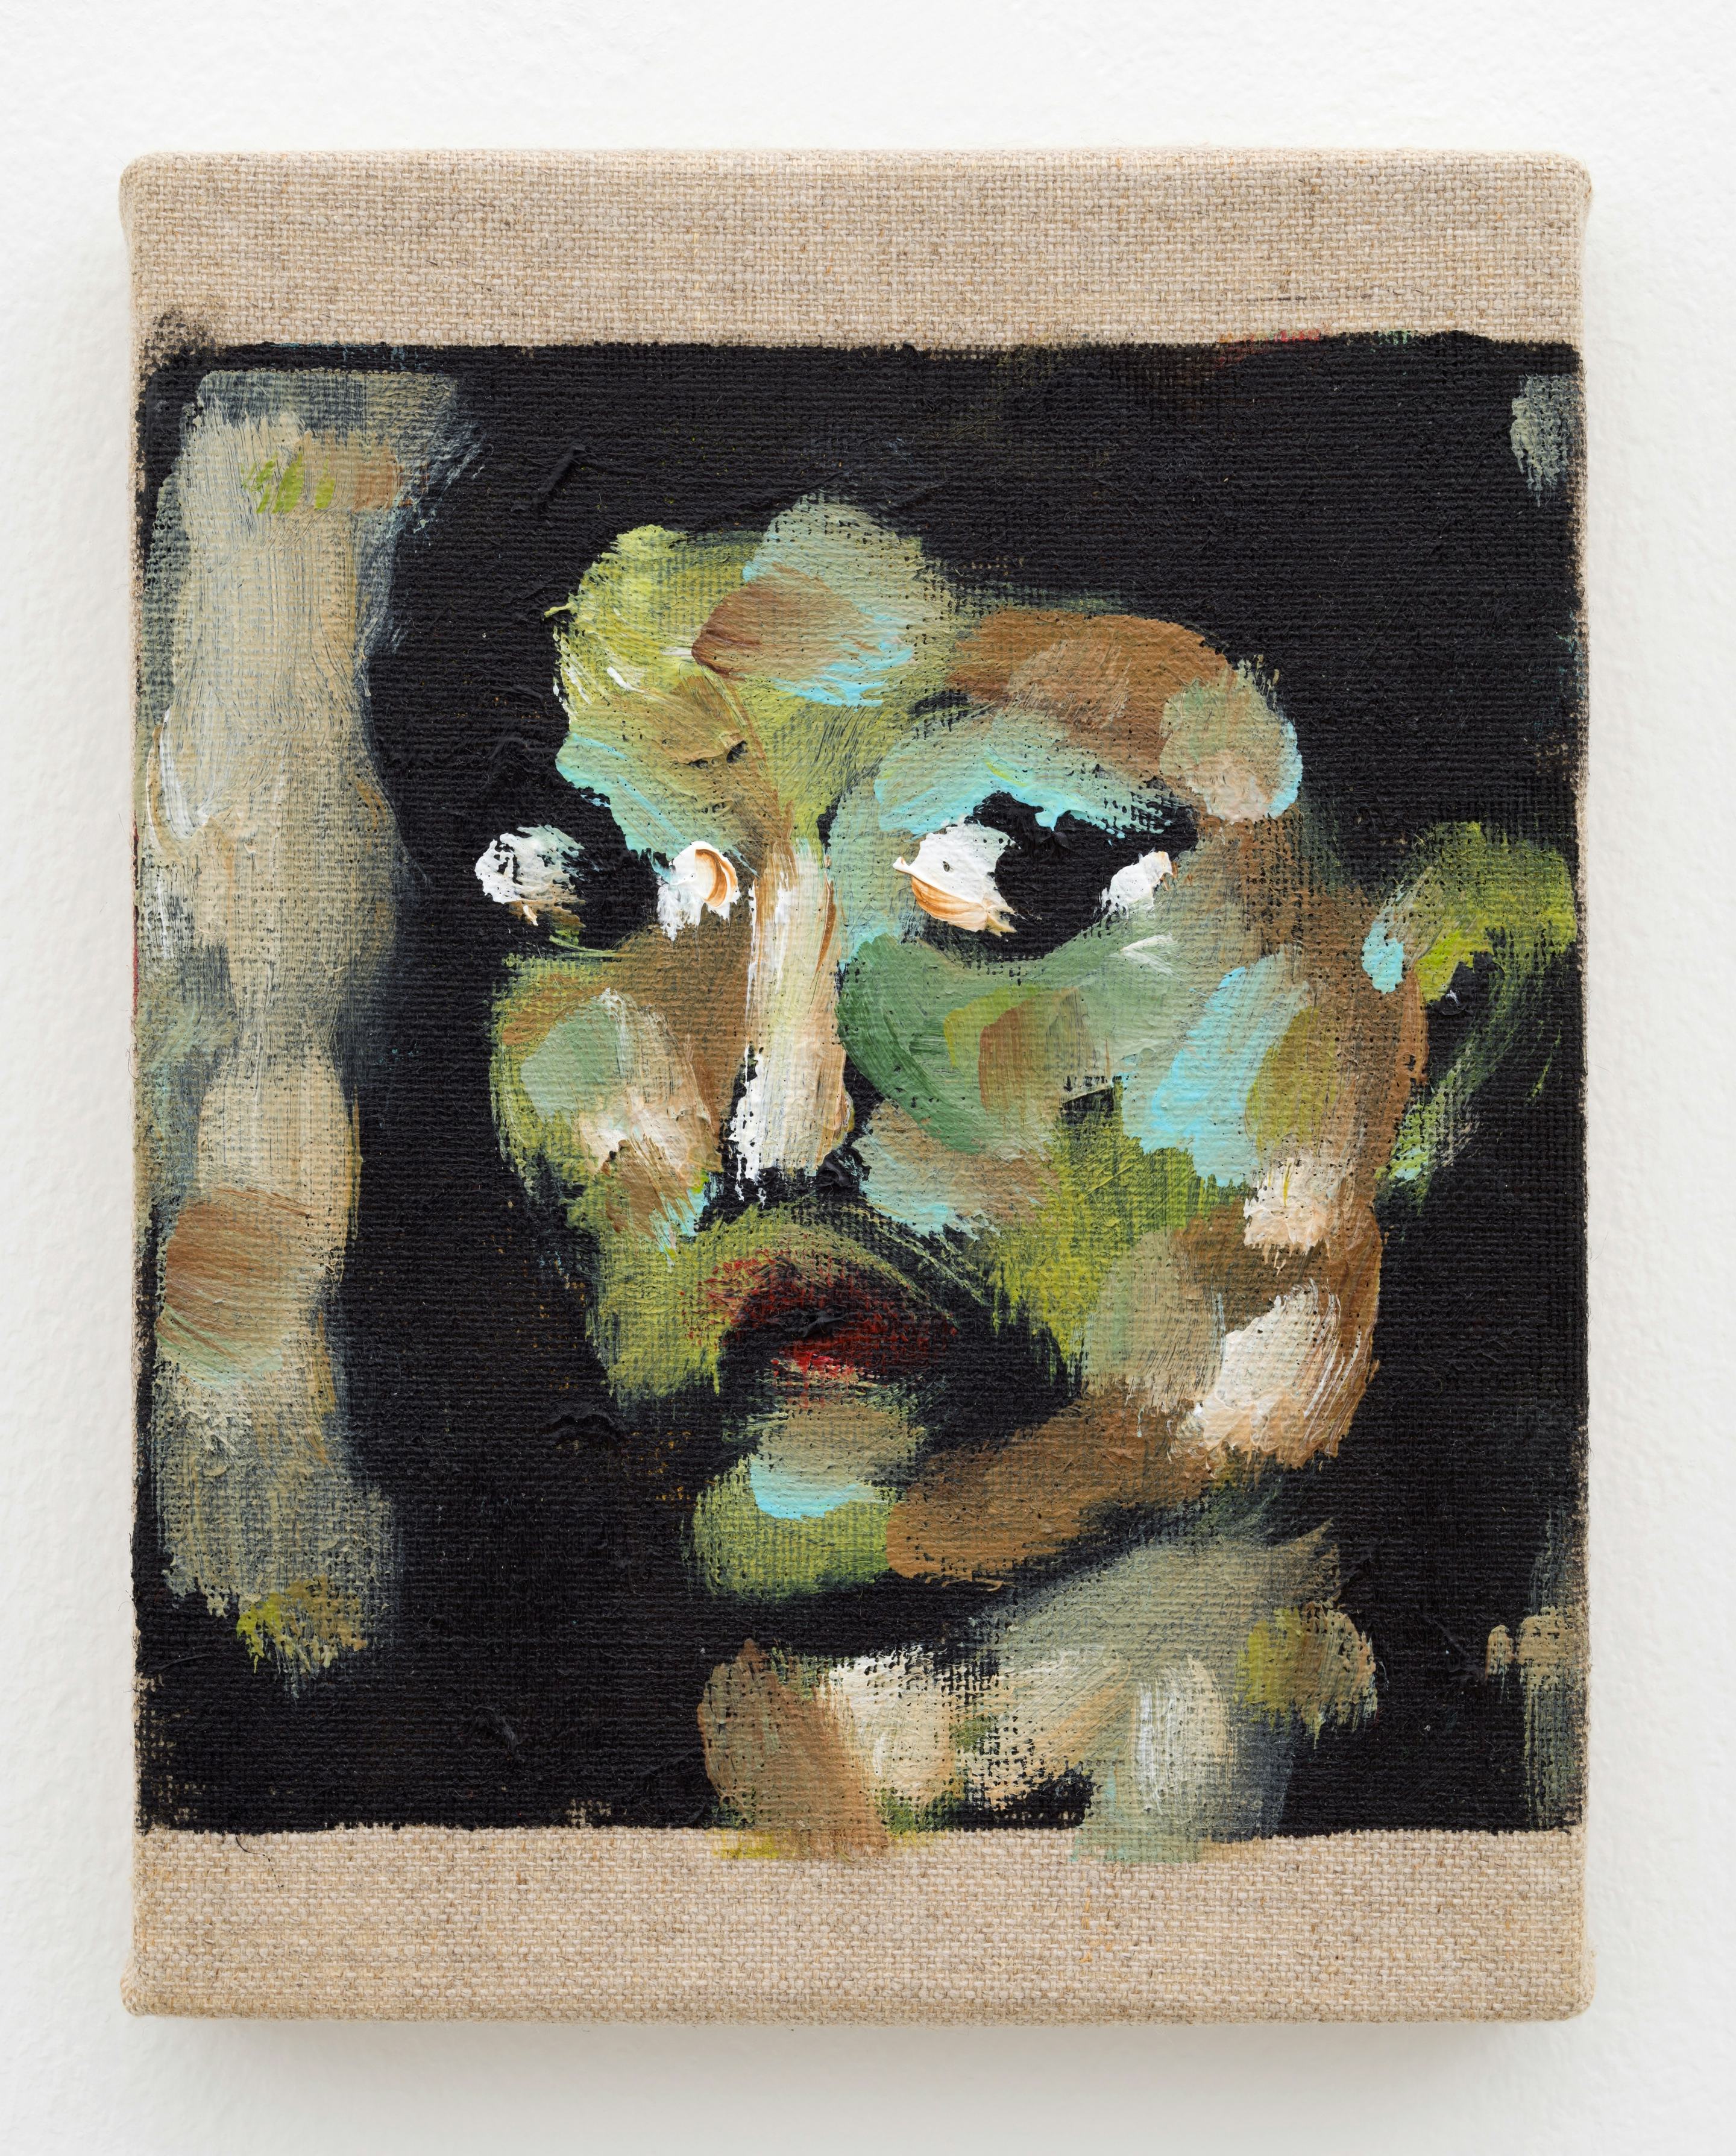 2016 Face 04 (2016)
Acrylic on canvas. 7 x 5.5 inches, 18 x 14 cm